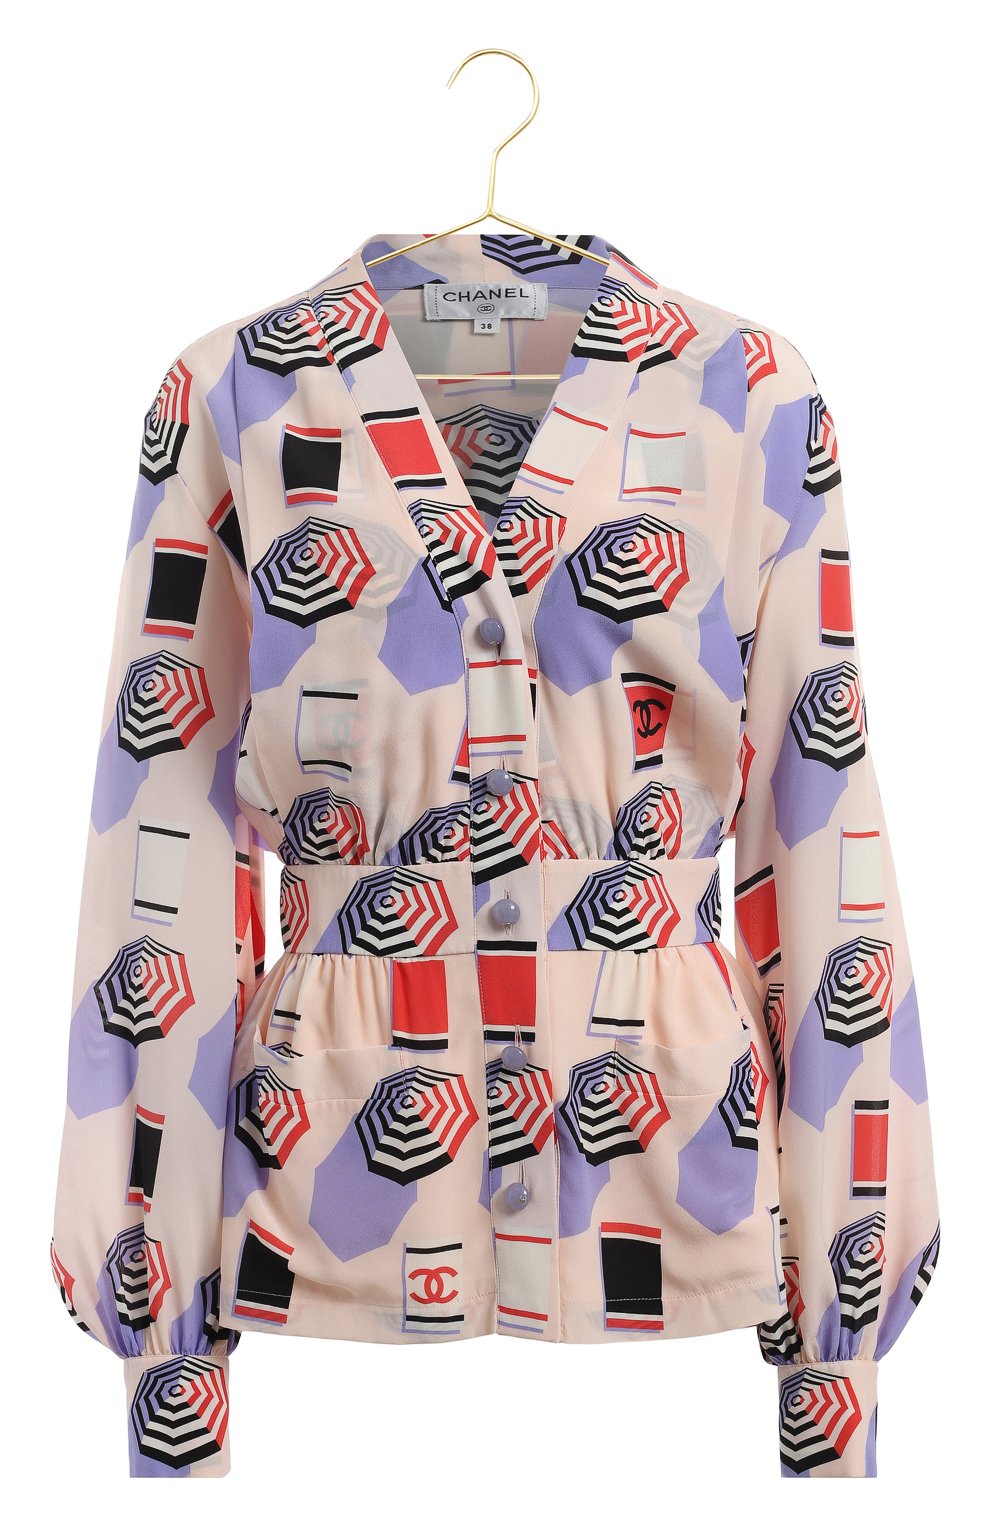 Шелковая блузка | Chanel | Разноцветный - 1